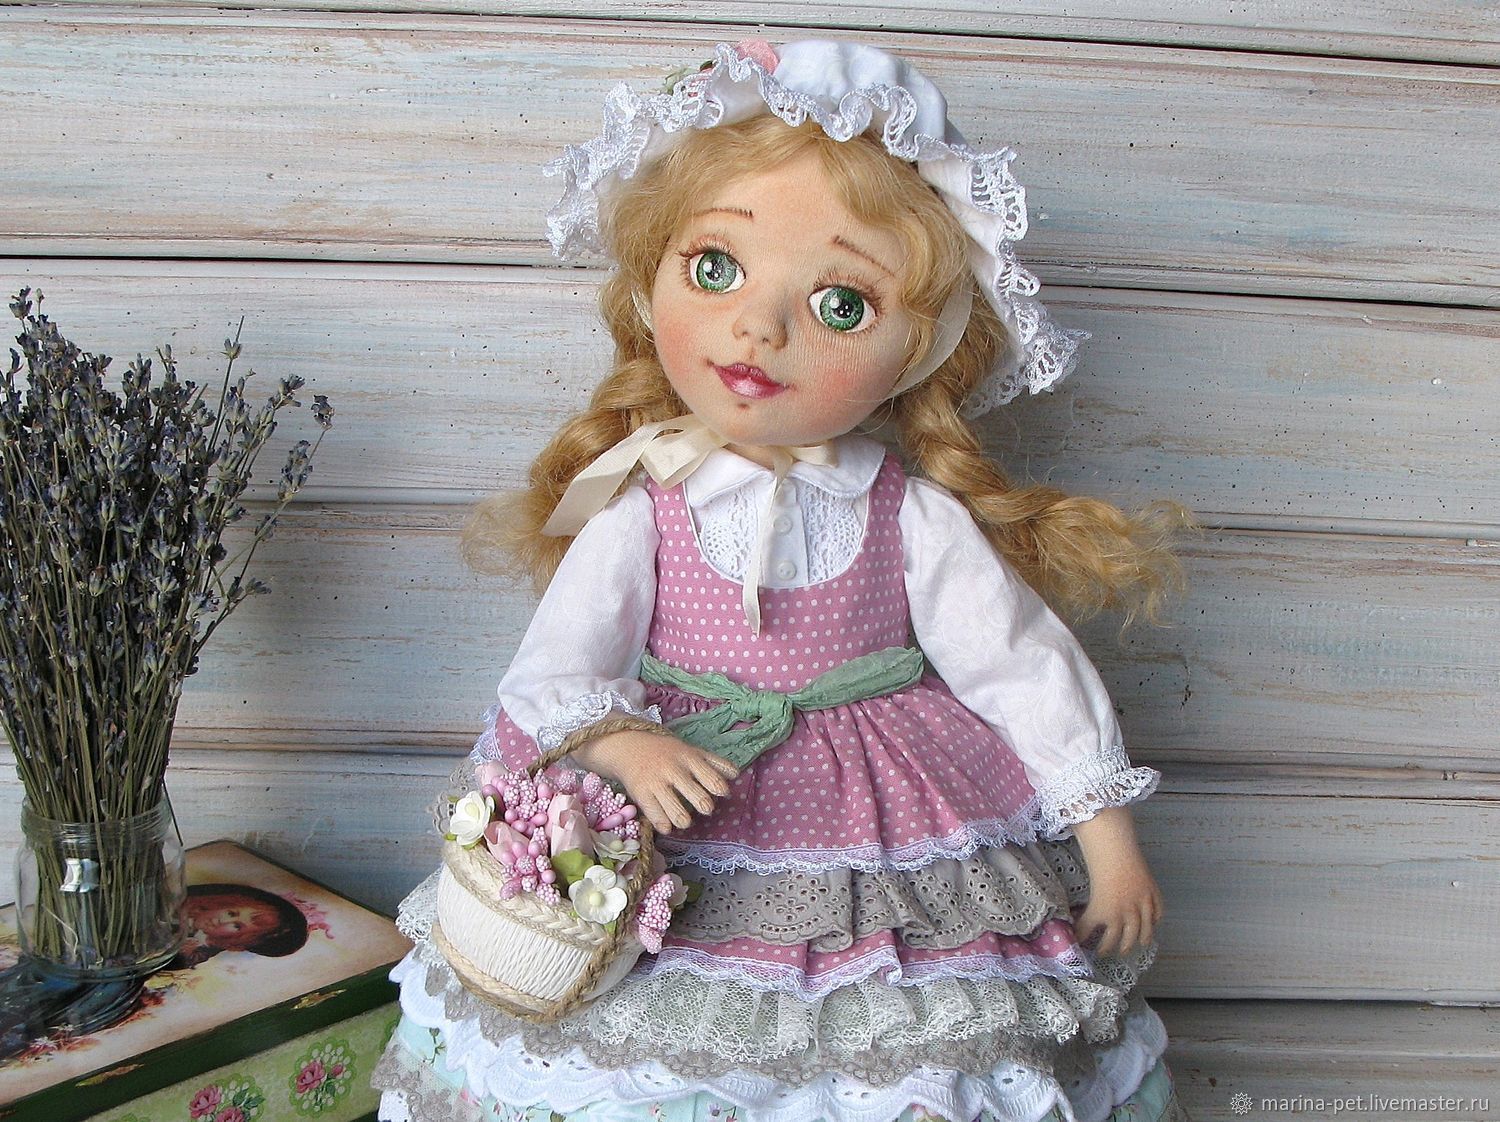 Купить куклу марту. Кукла март. Куклы из трикотажа. Кукла матра Нижний Новгород.